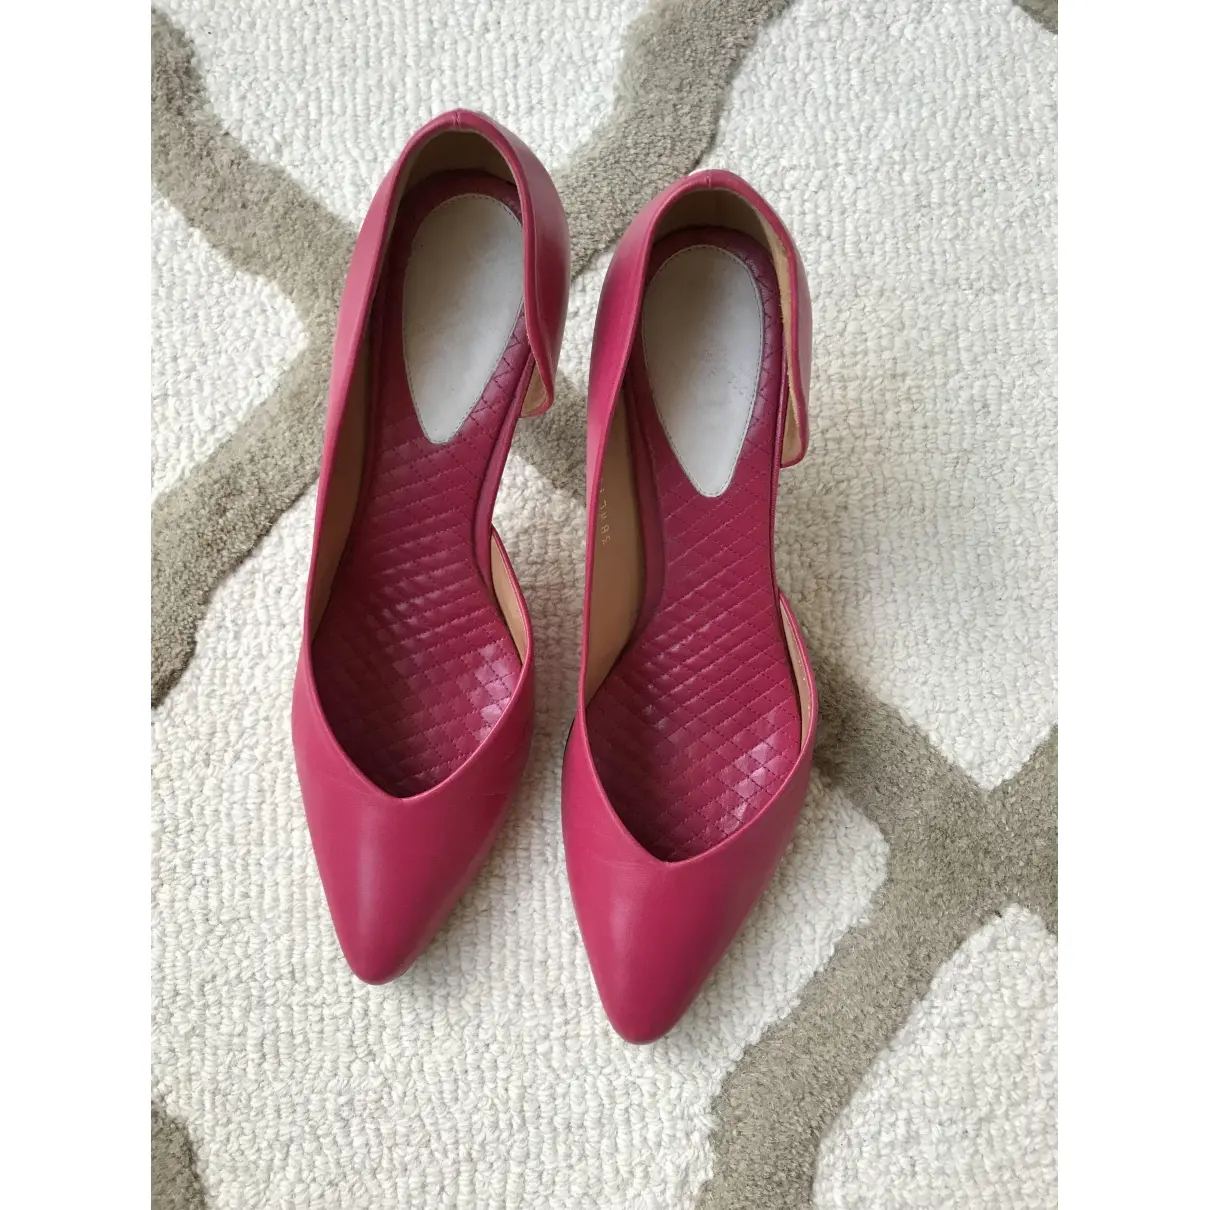 Maison Martin Margiela Leather heels for sale